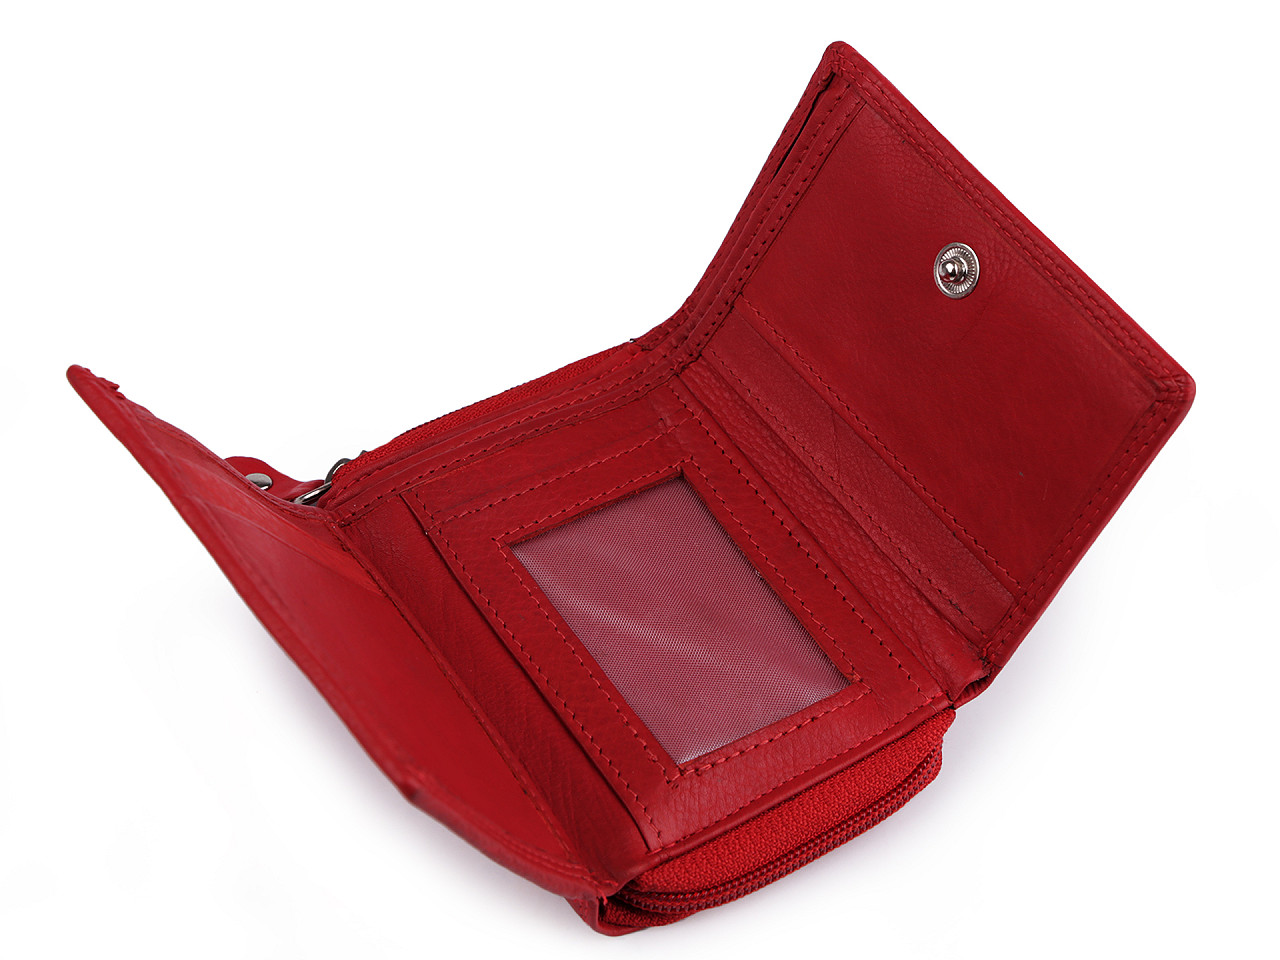 Damen-Geldbörse aus Leder, rot, 1 Stück